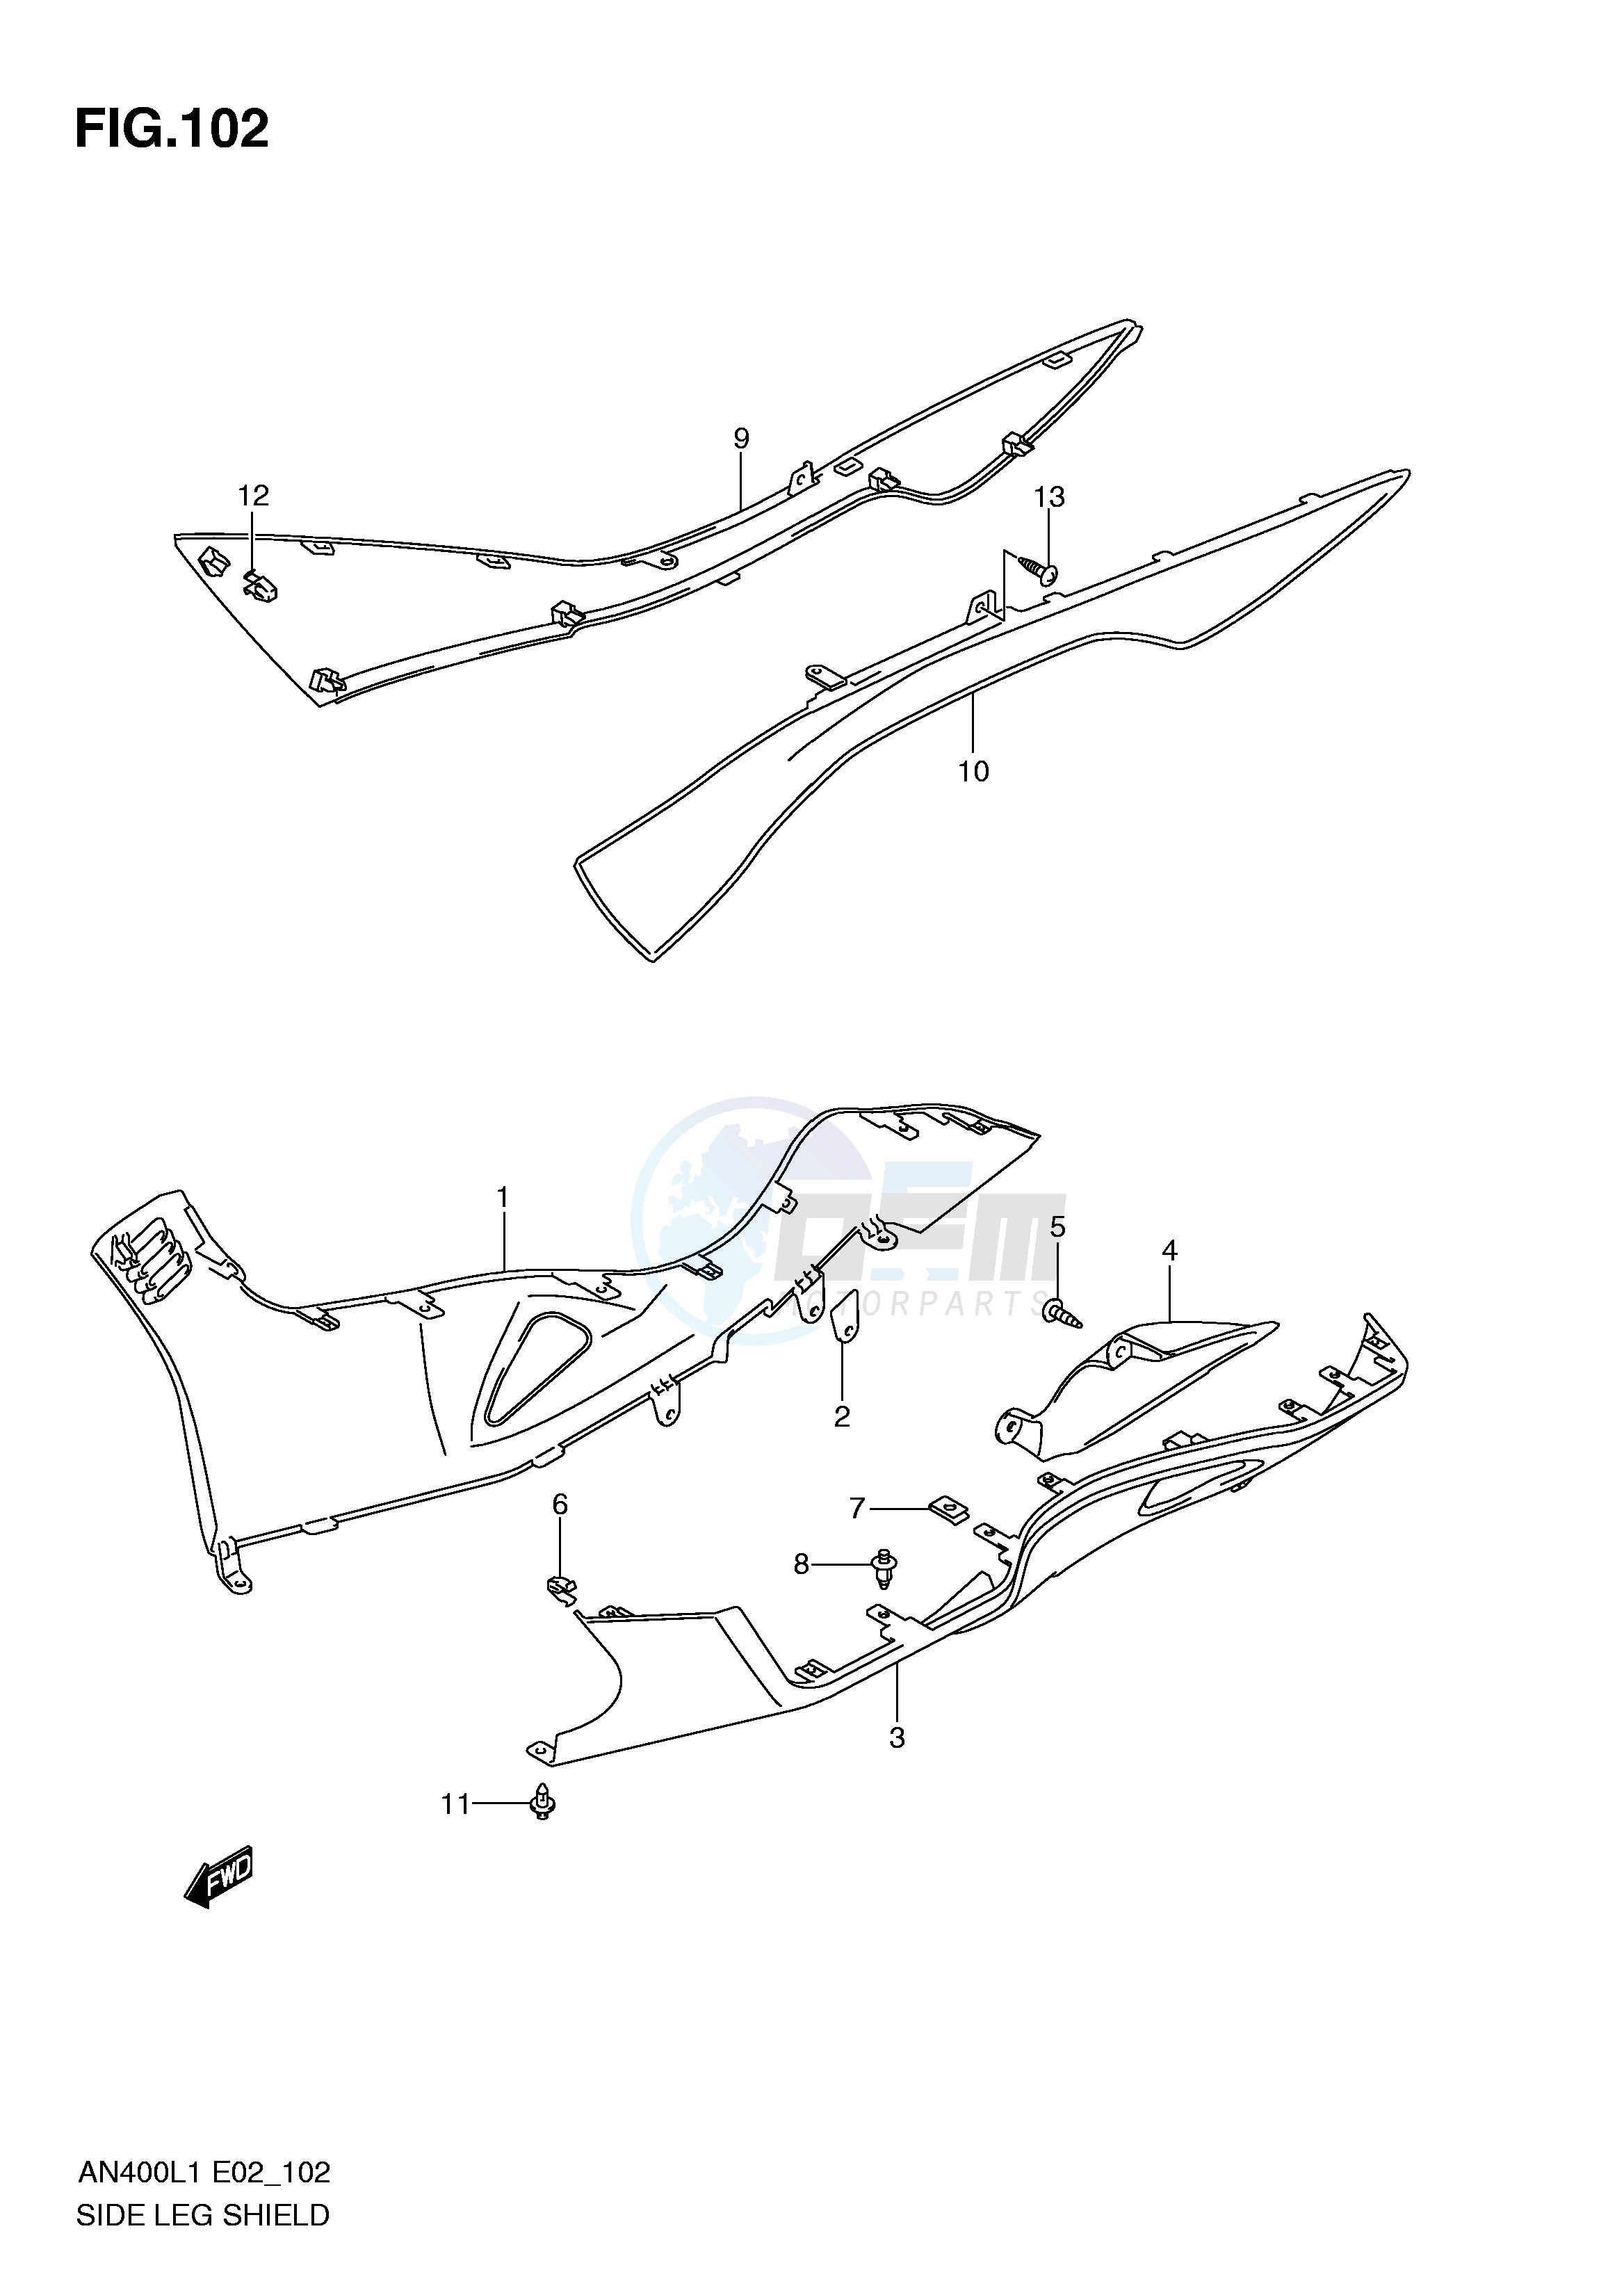 SIDE LEG SHIELD (AN400AL1 E19) blueprint